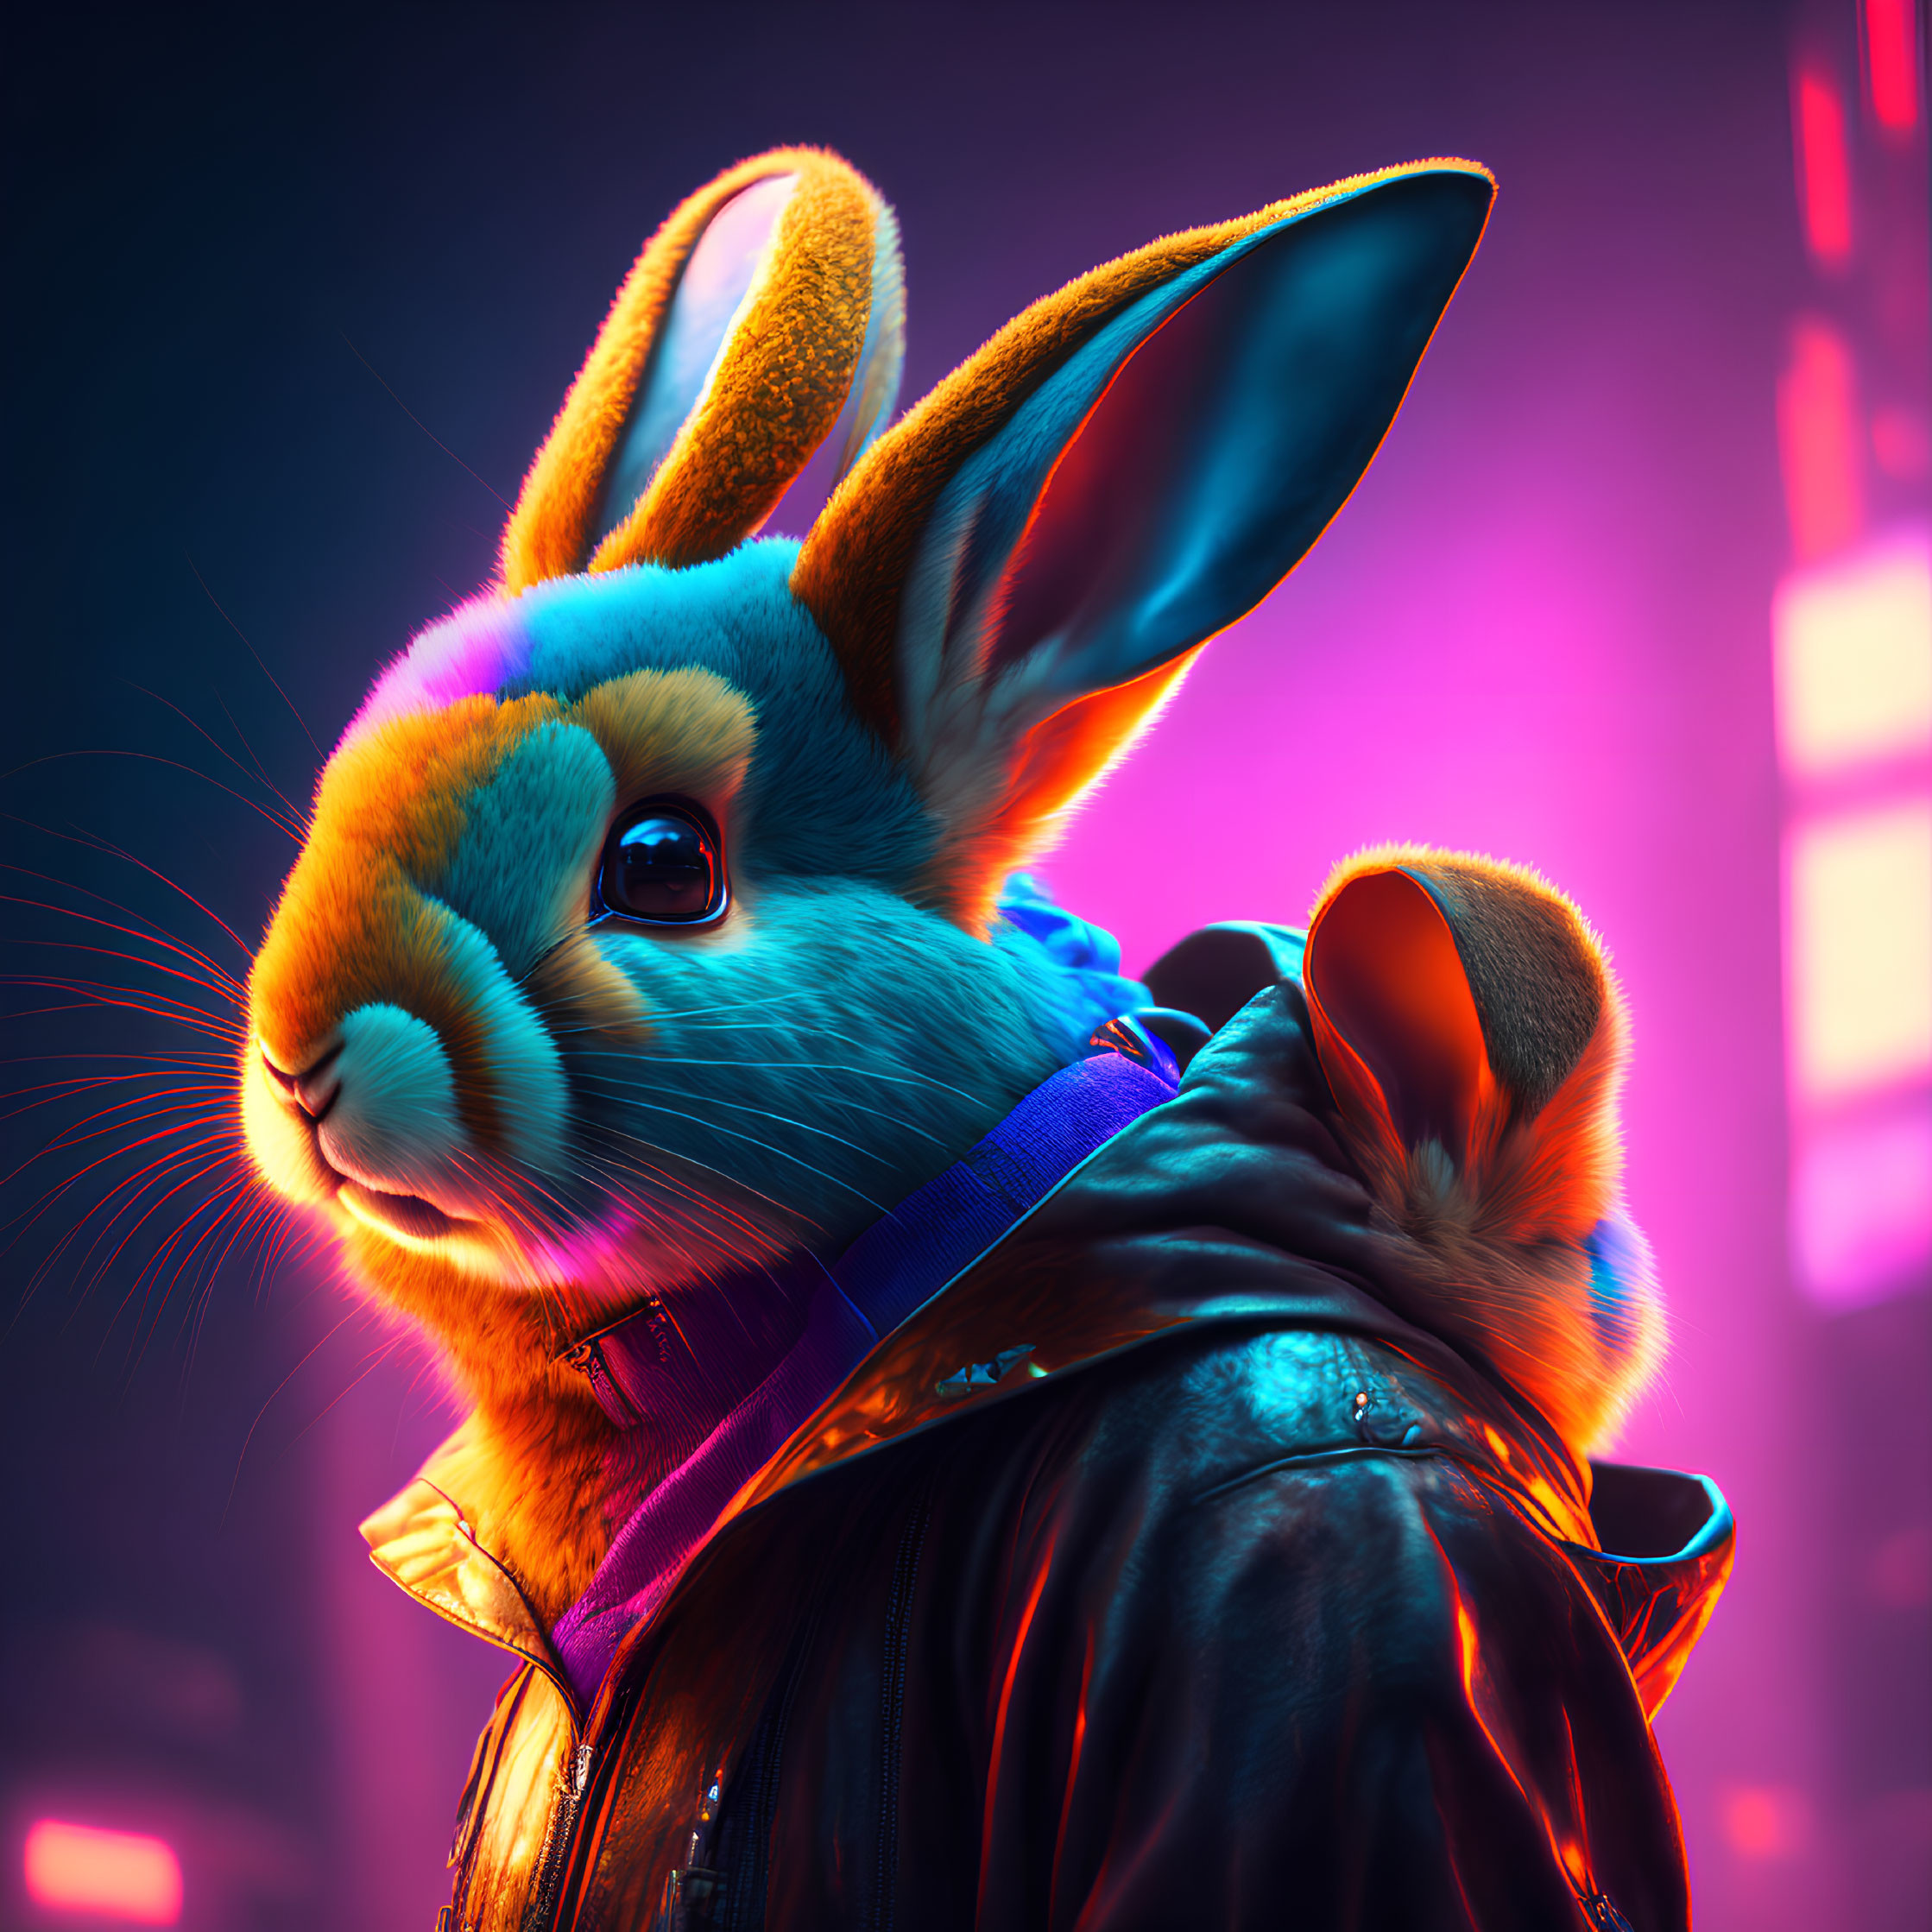 Stylized digital image: Neon rabbit in jacket against city lights